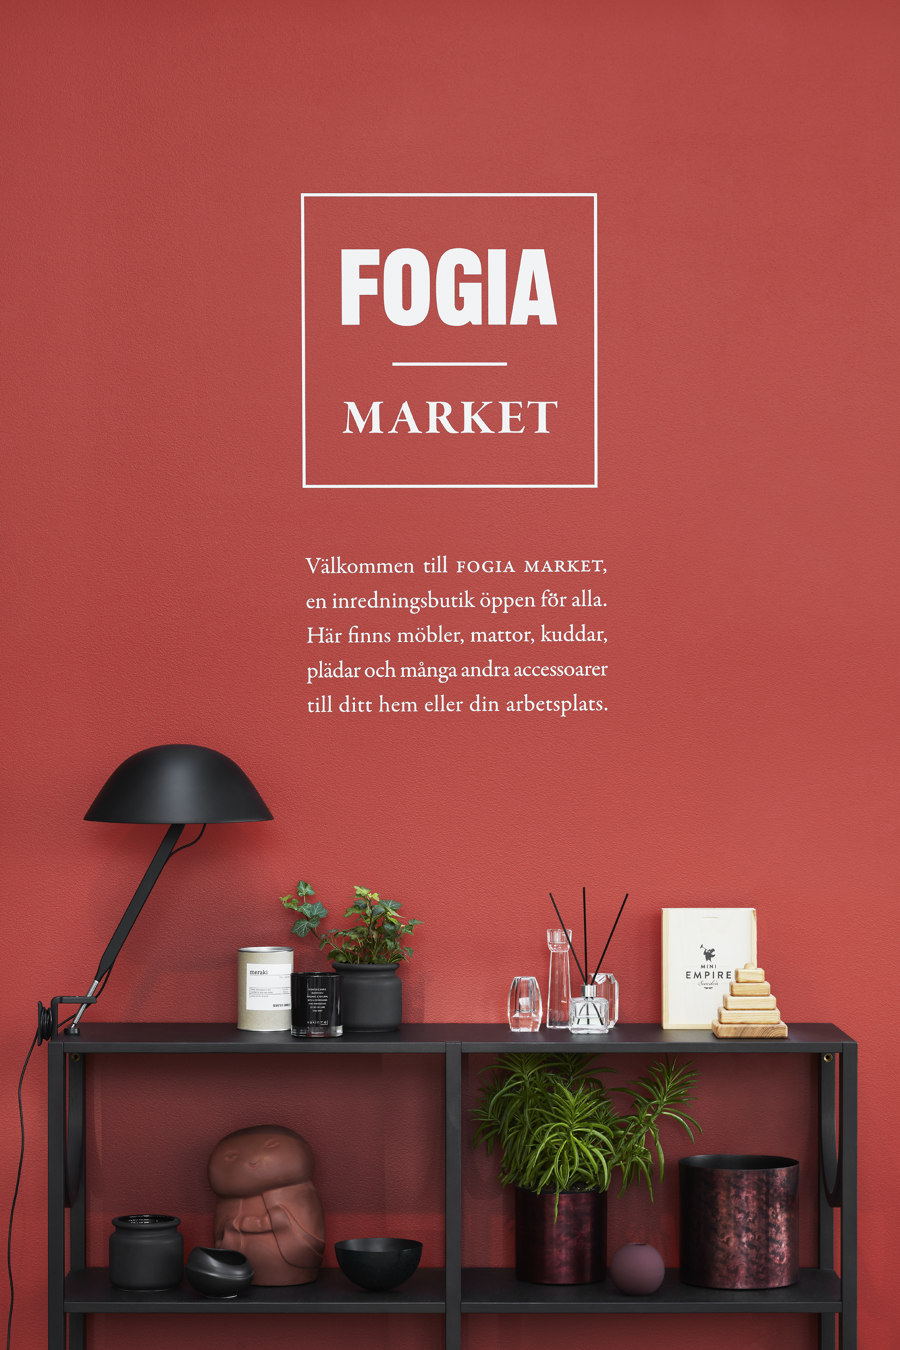 Fogia's showroom von Code Concept | Showrooms